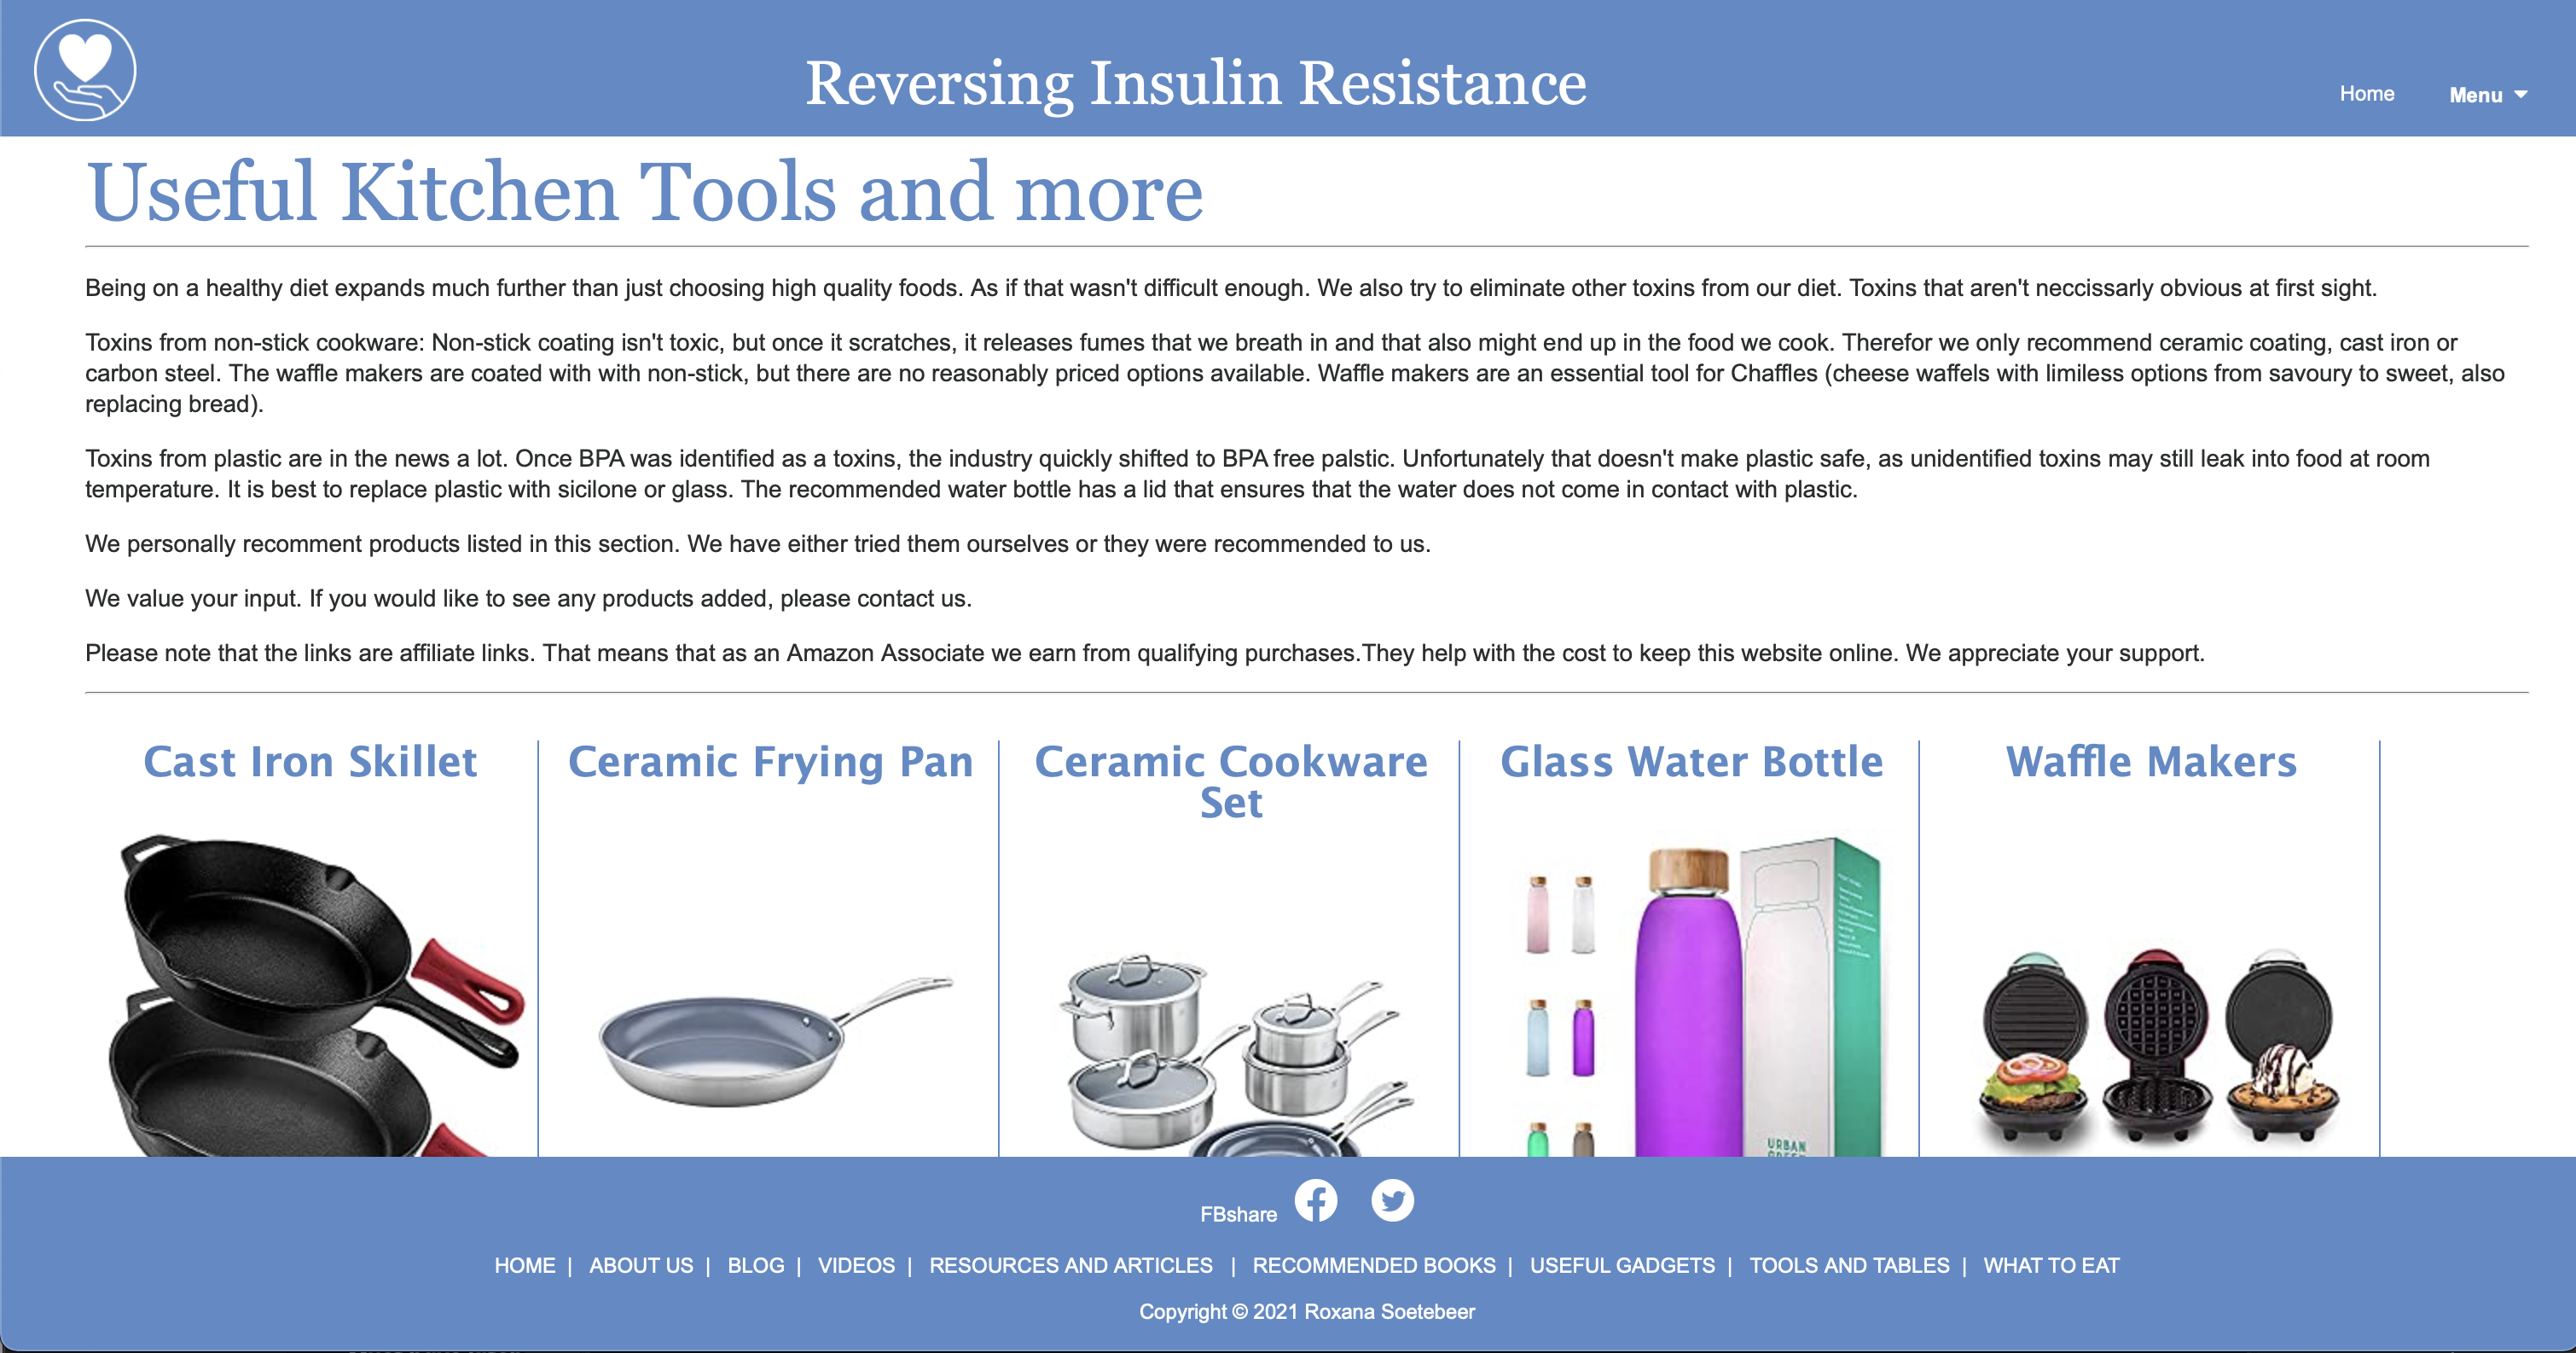 https://reversing-insulin-resistance.com/Media/previews/kitchentools.png